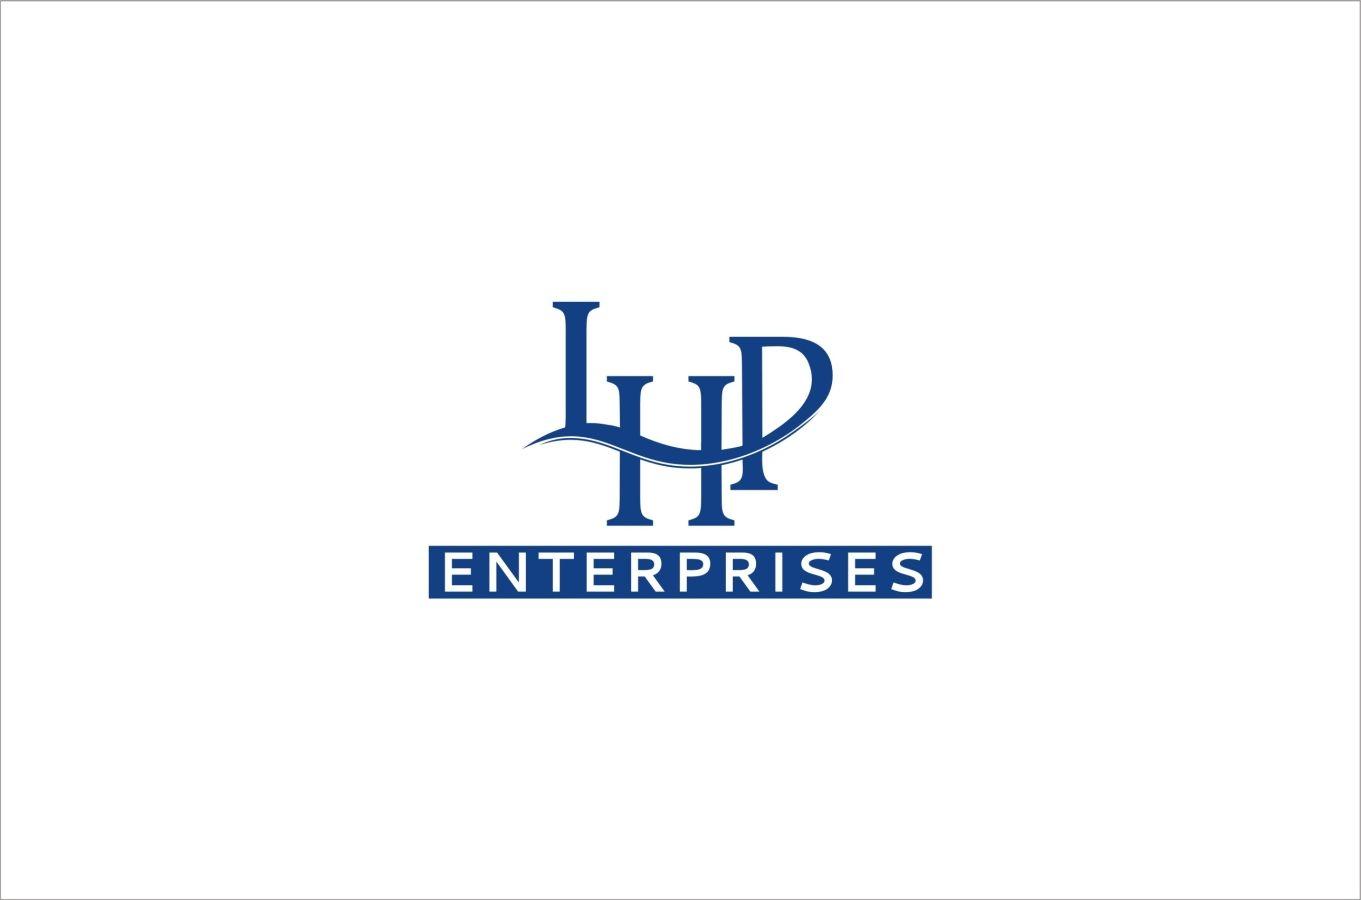 LHP Logo - Bold, Modern, Internet Logo Design for LHP Enterprises by logoworld ...